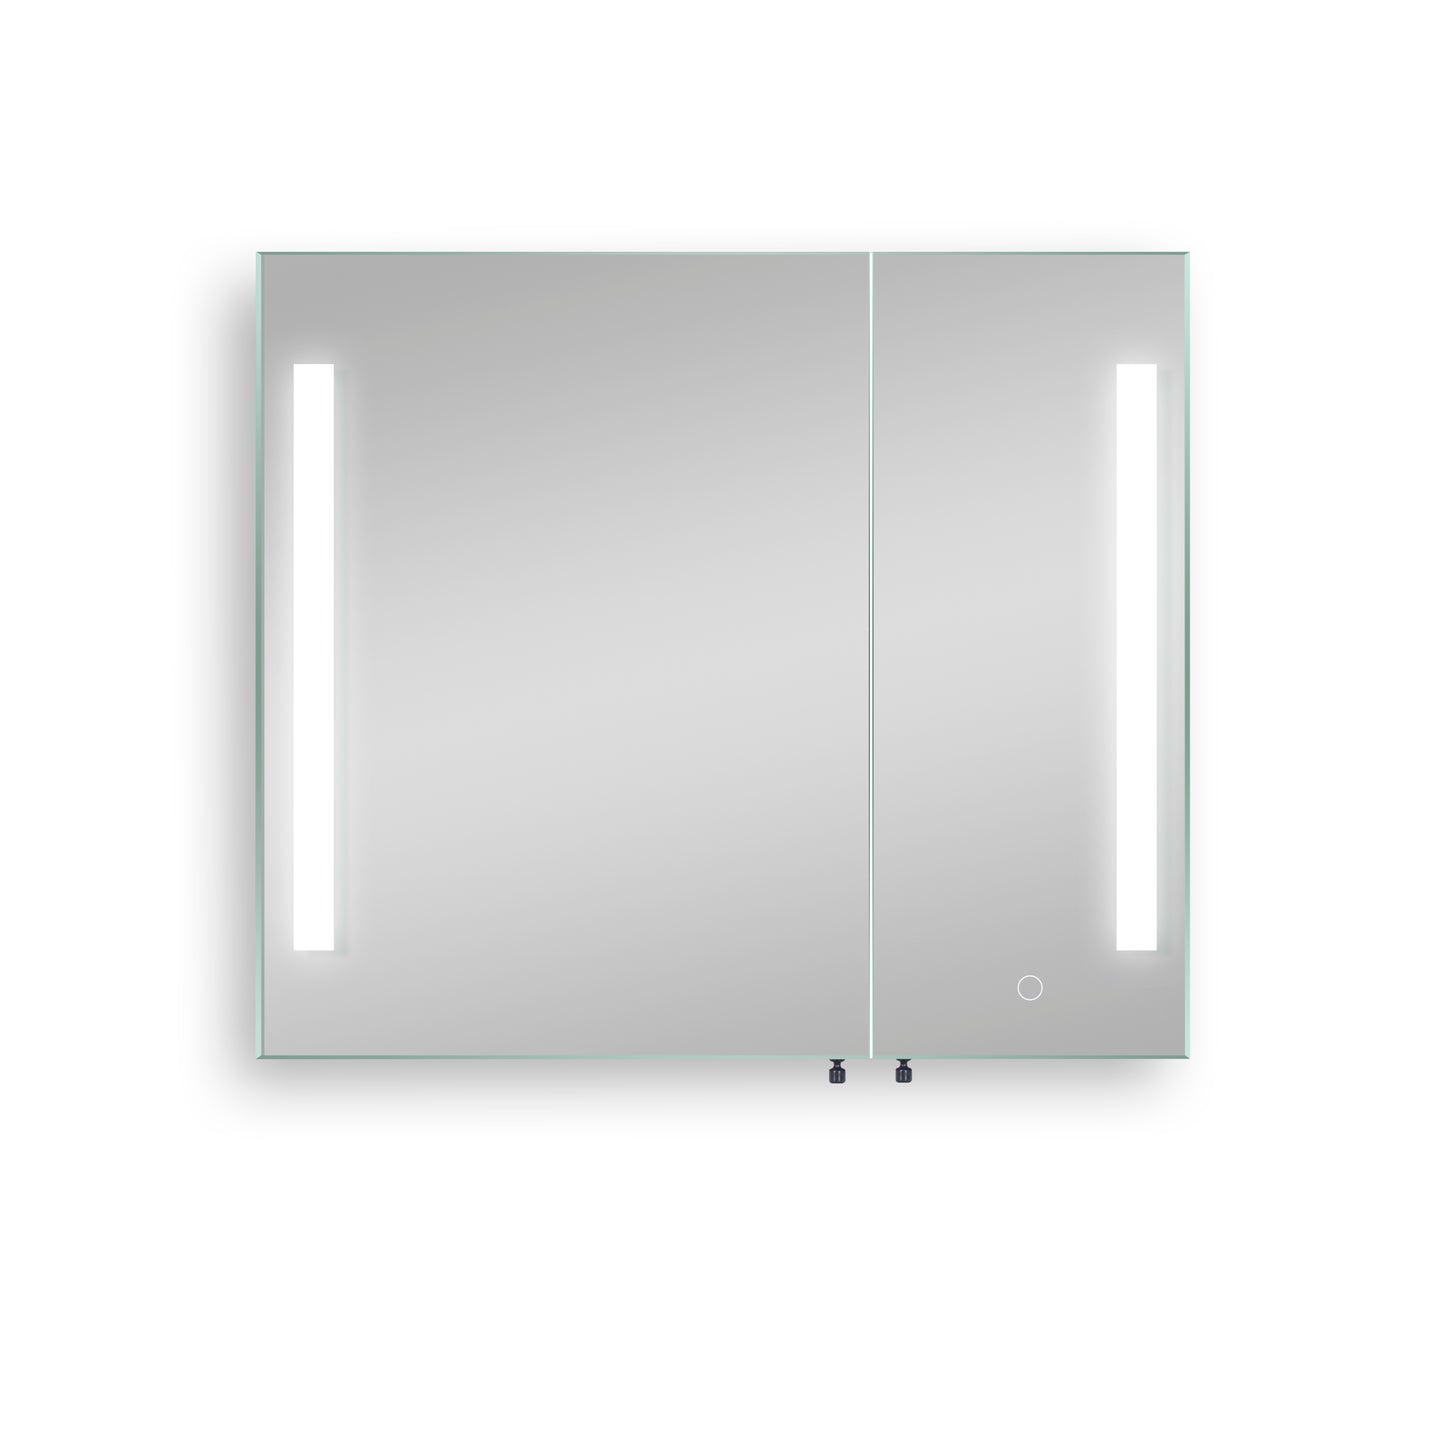 30x26 inch Black LED Mirror Medicine Cabinet Surface, Defogger, Anti-Fog,Dimmable Lights Brightness Memory